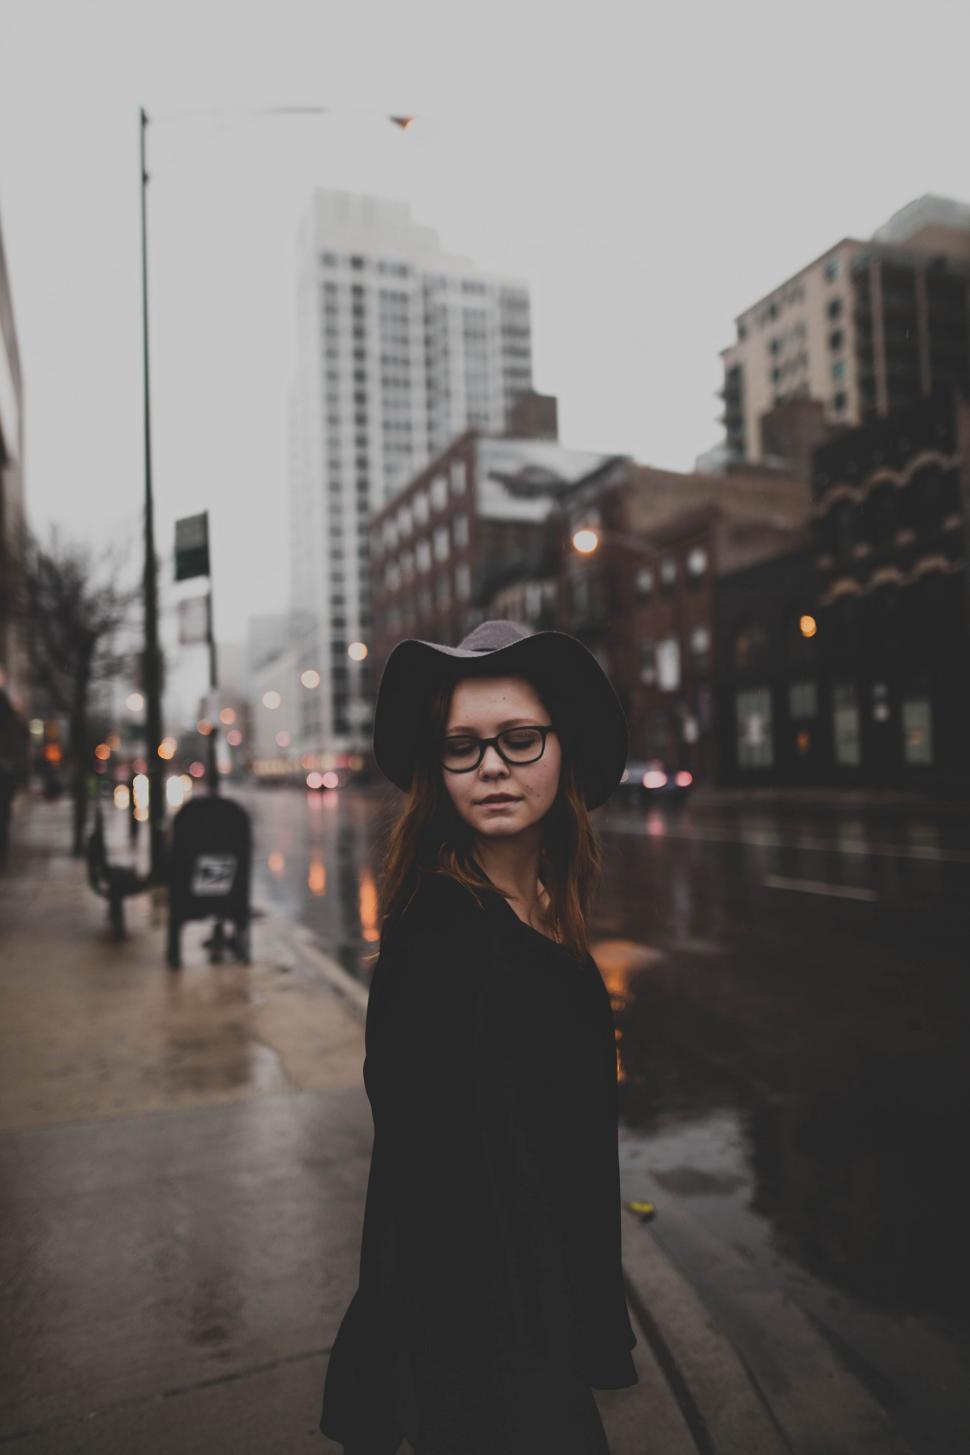 Free Image of Woman Standing on Sidewalk in Rain 